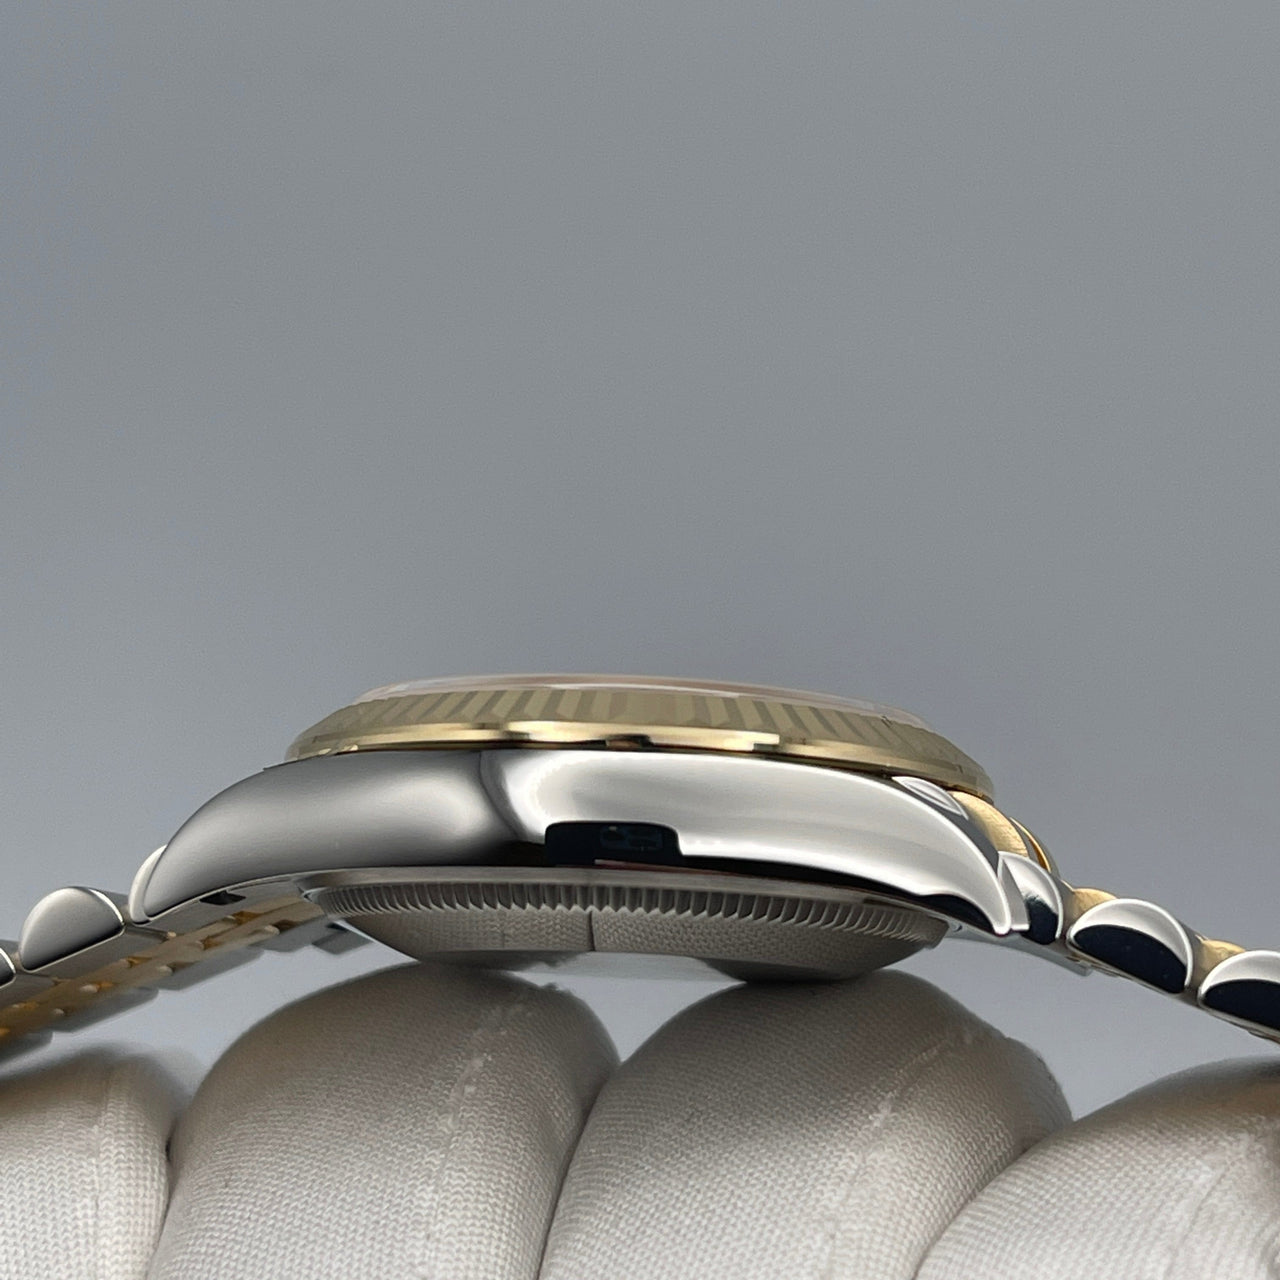 Luxury Watch Rolex Datejust 31 Yellow Gold & Stainless Steel Silver Dial 278273 Wrist Aficionado